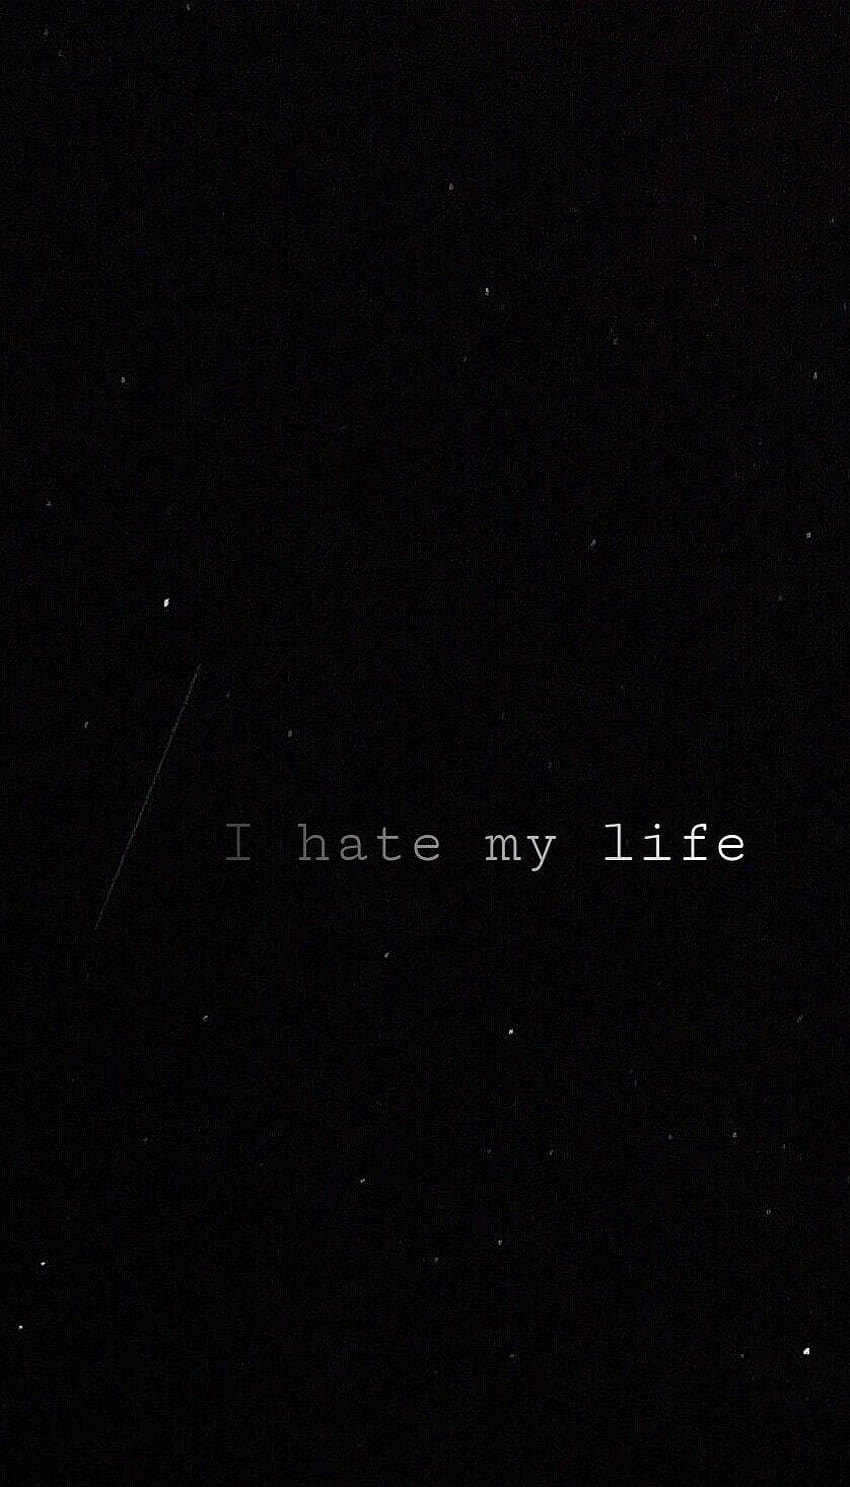 I hate me too